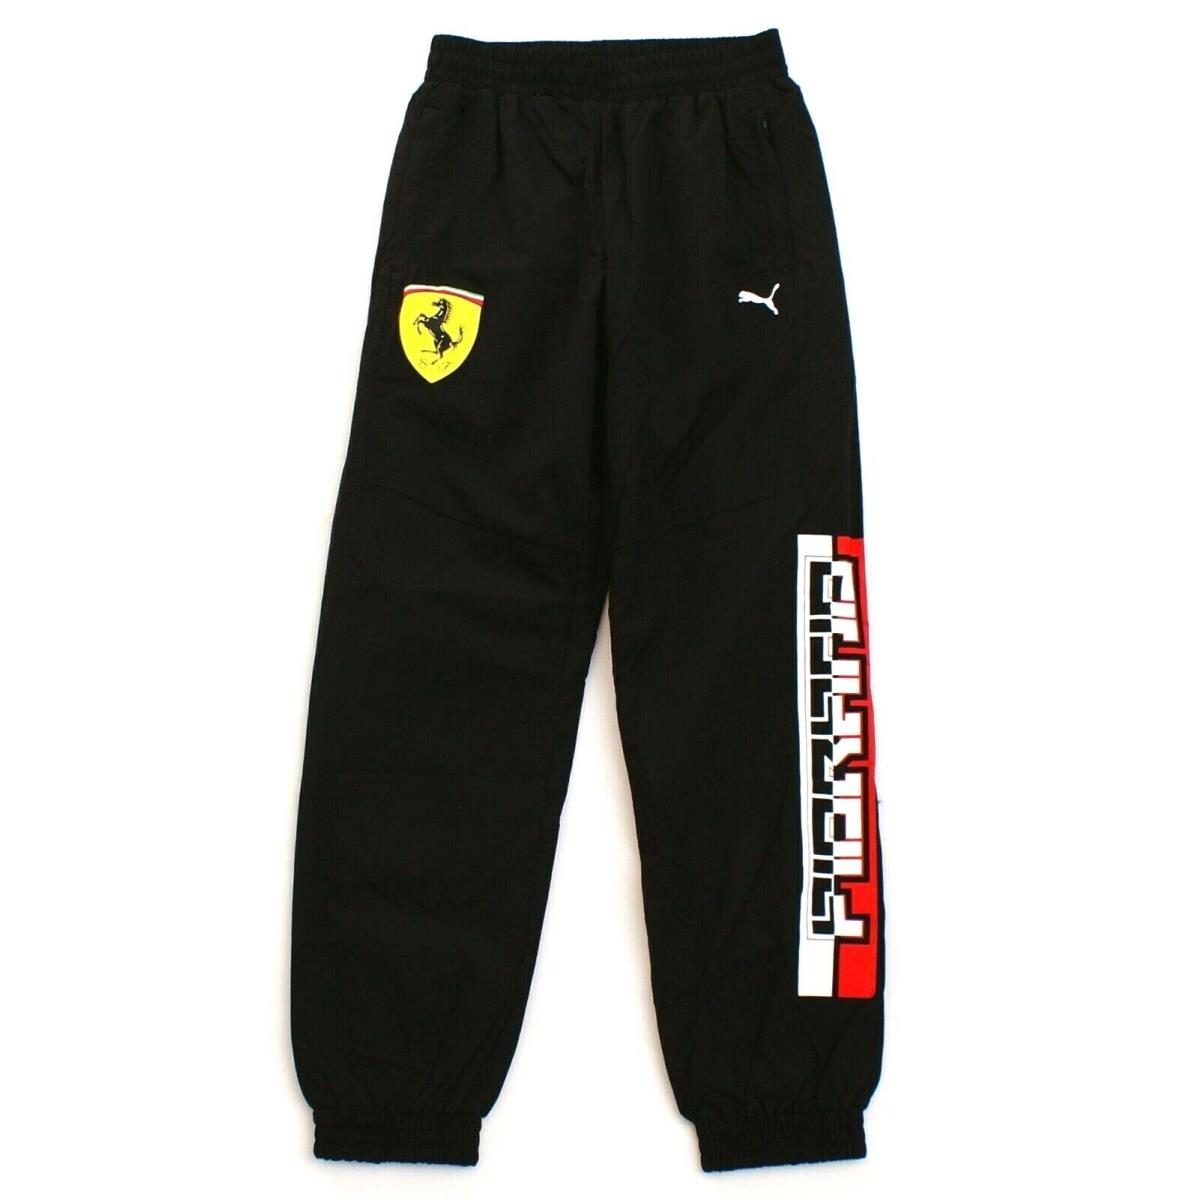 Puma Black Scuderia Ferrari Street Woven Mesh Lined Pants Men`s